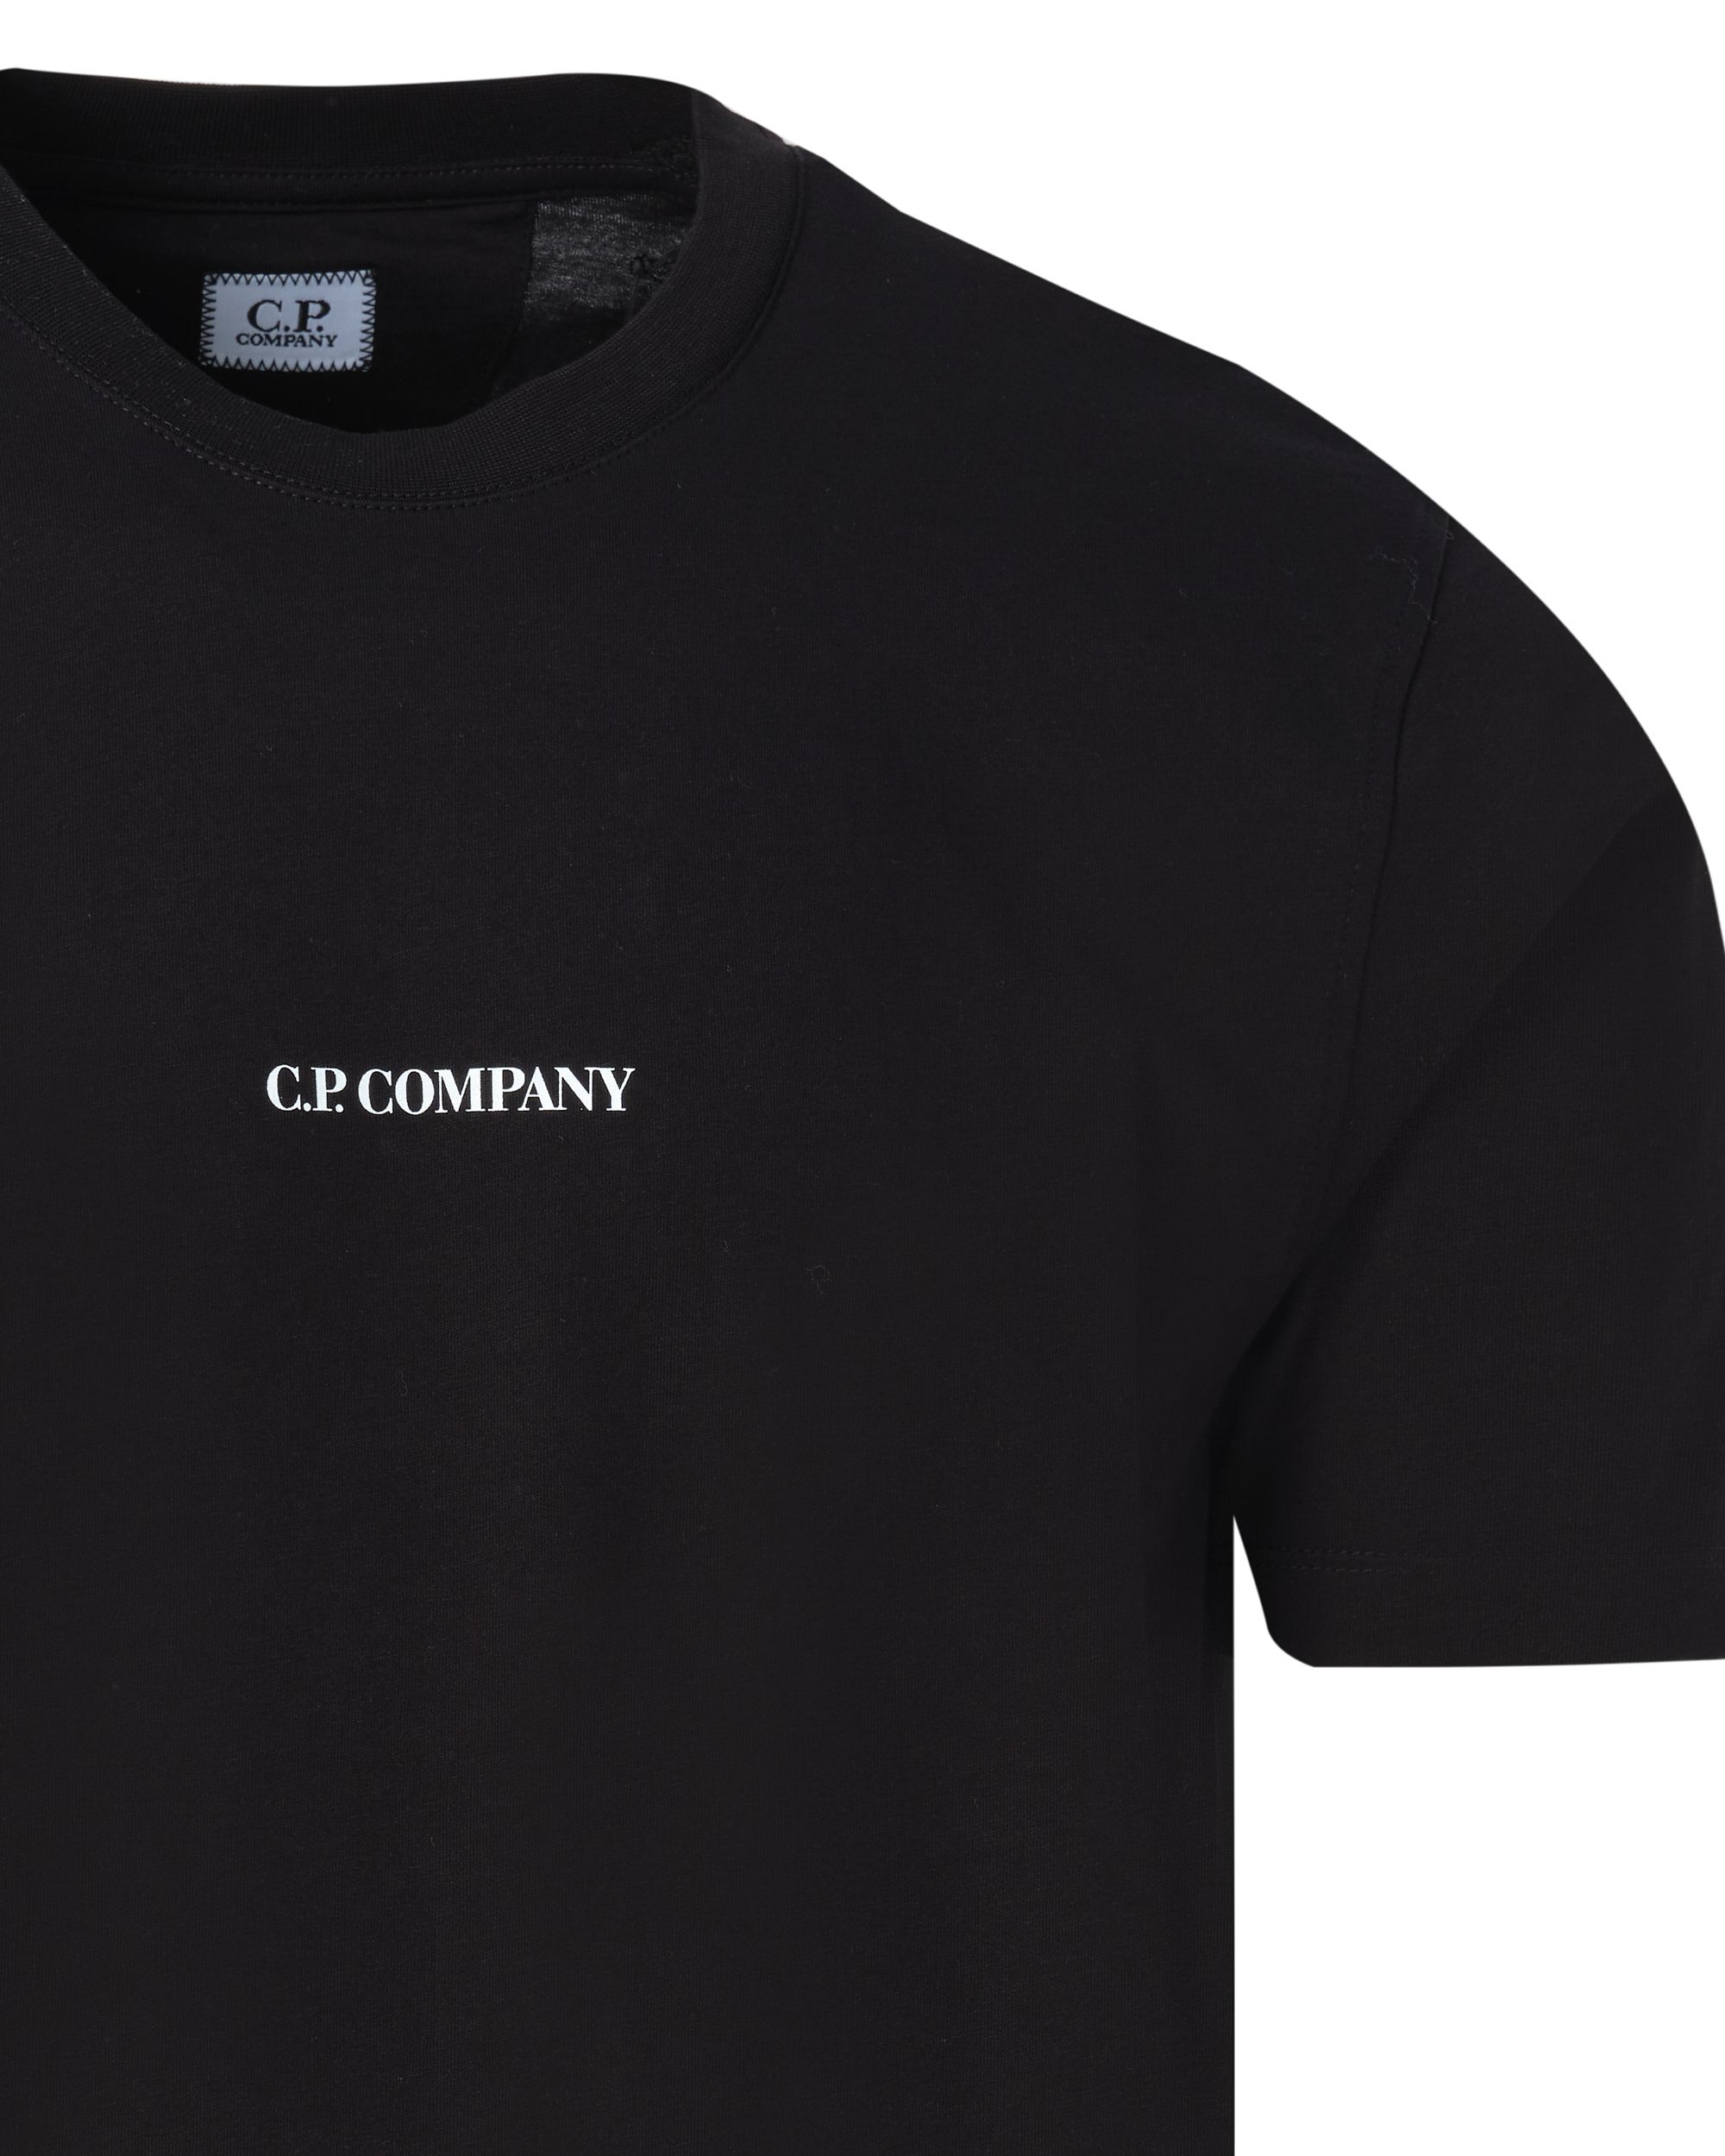 C.P Company T-shirt KM Zwart 082468-001-L